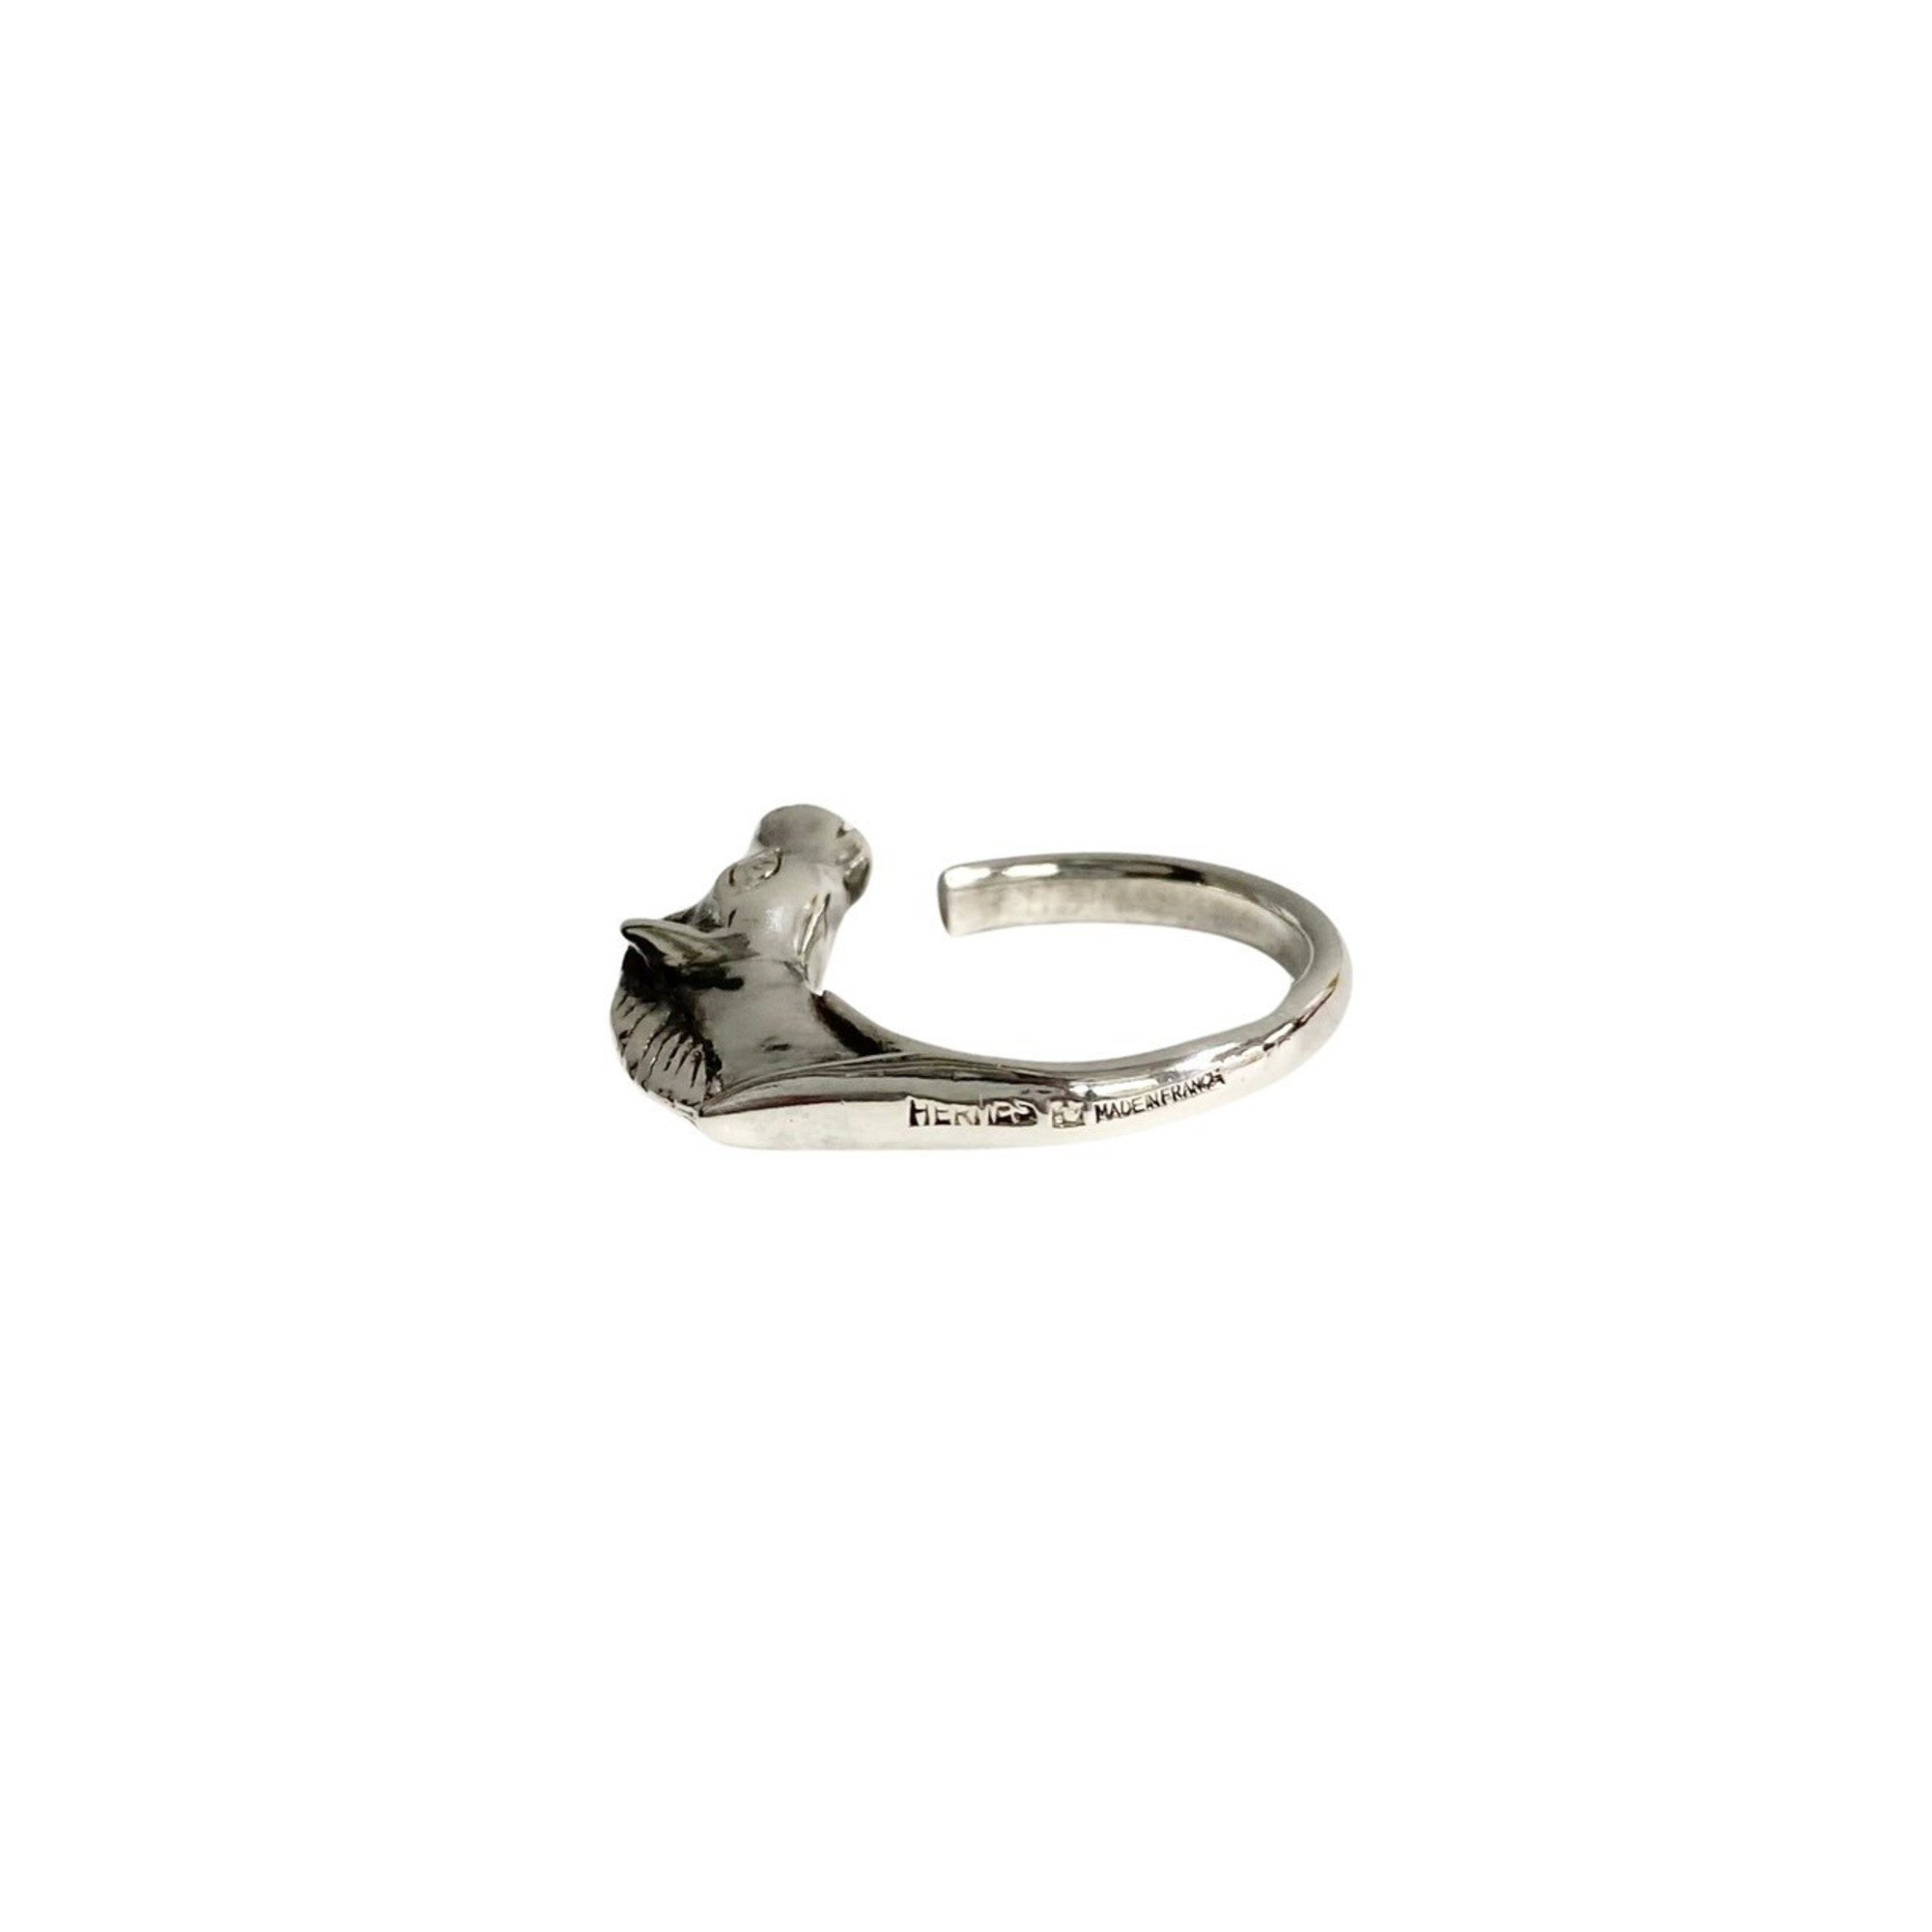 HERMES Cheval Horse Ring, Silver 925, Women's 13686